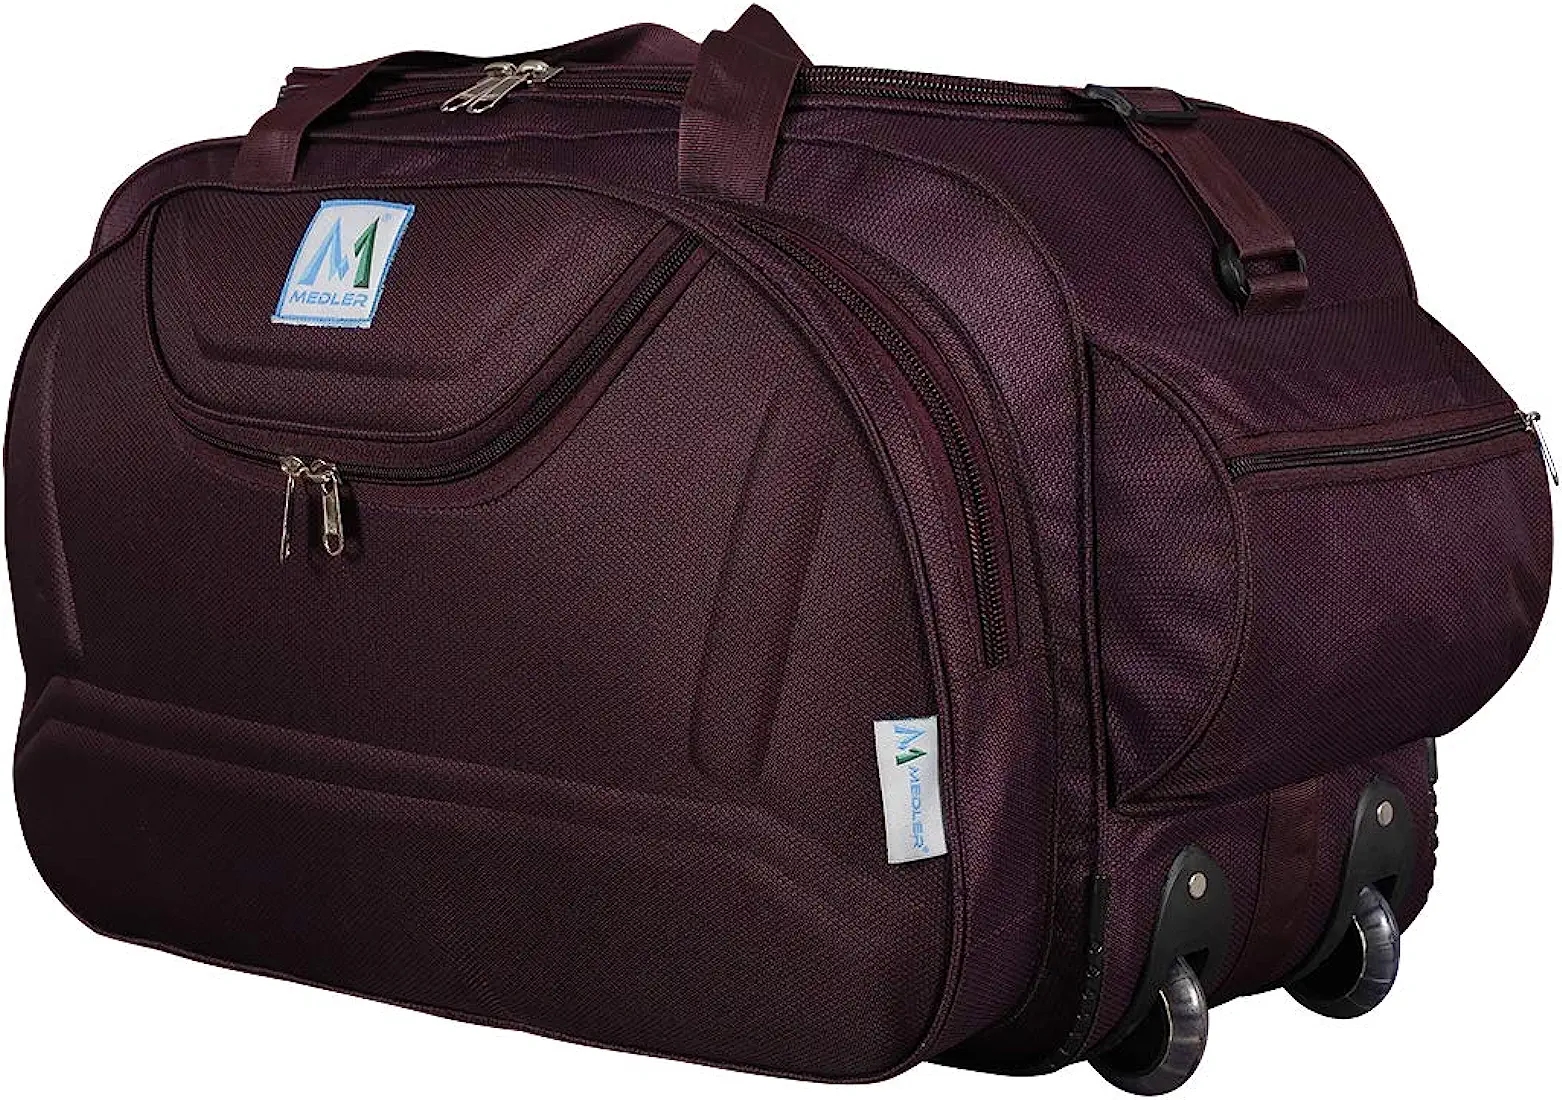 Cheapest Trolley MarketTrolley Bag in Delhibest smart luggagecheapest bag  market in delhi  YouTube